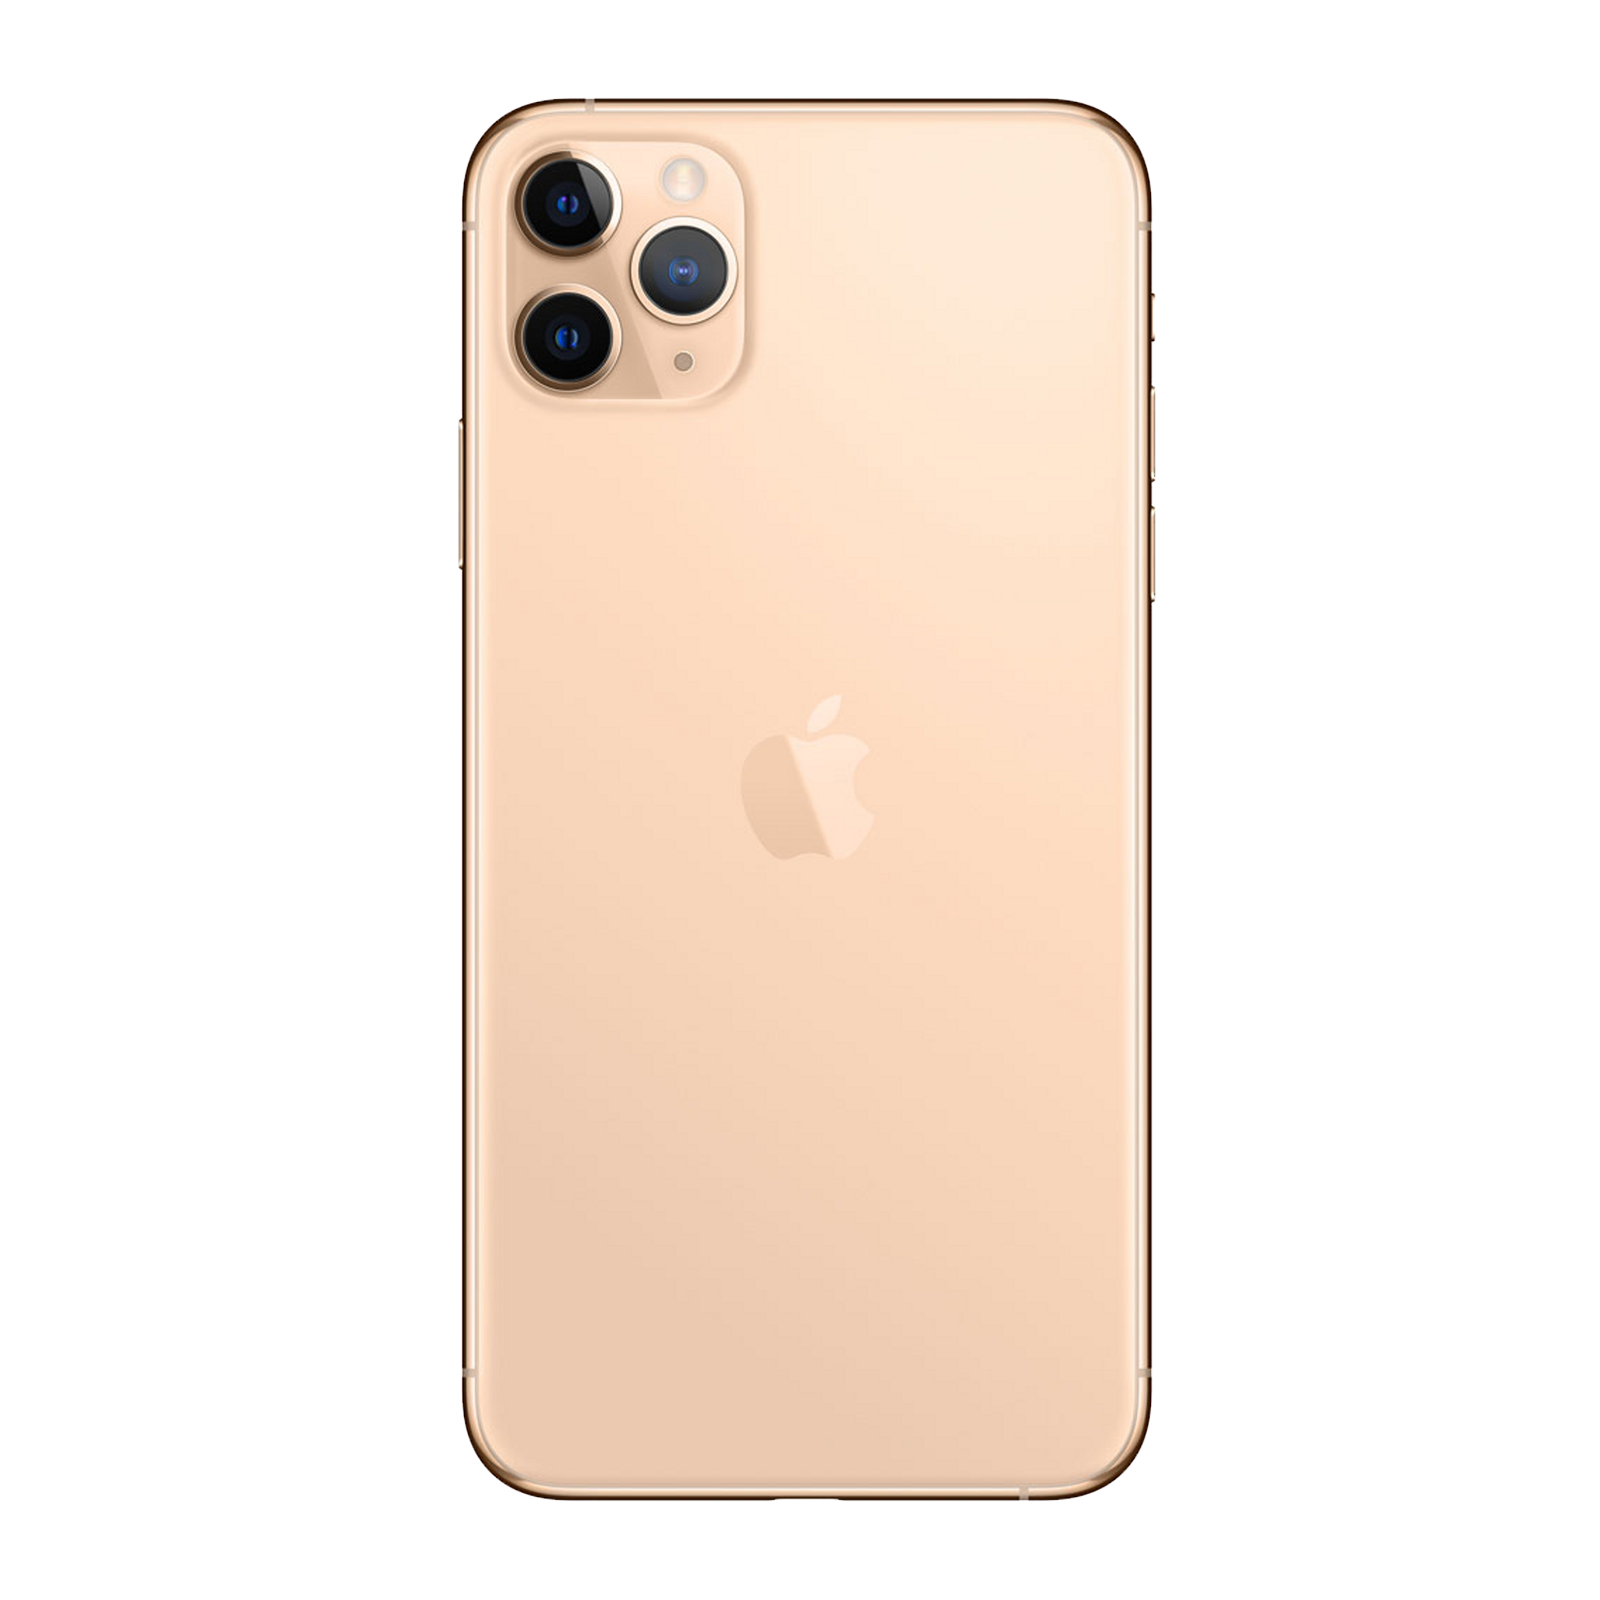 Apple iPhone 11 Pro Max 64GB Gold Fair - Verizon